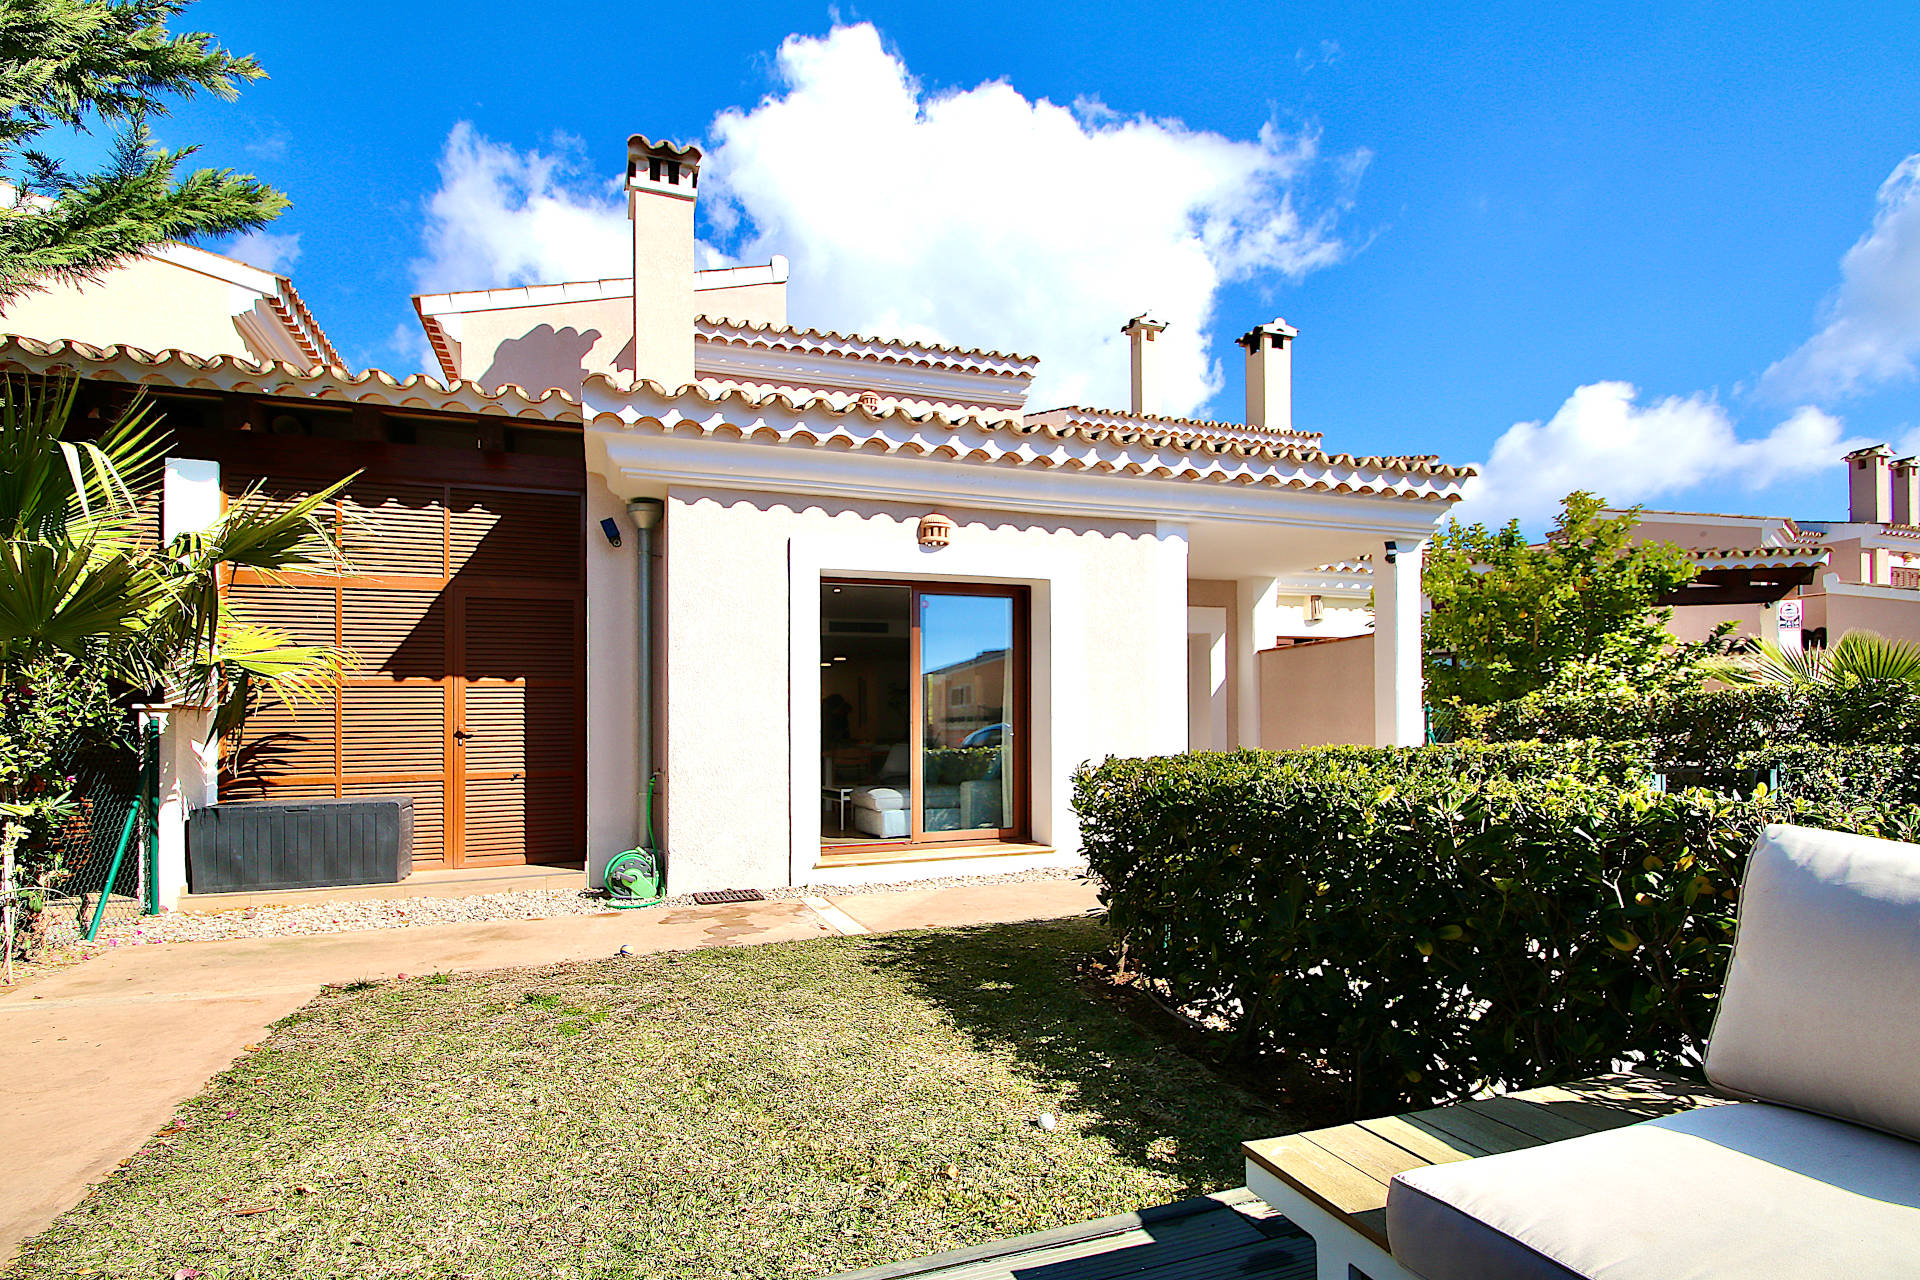 A vendre, Santa Ponsa, villa de style méditerranéen au pied du golf de Santa Ponsa Santa Ponsa